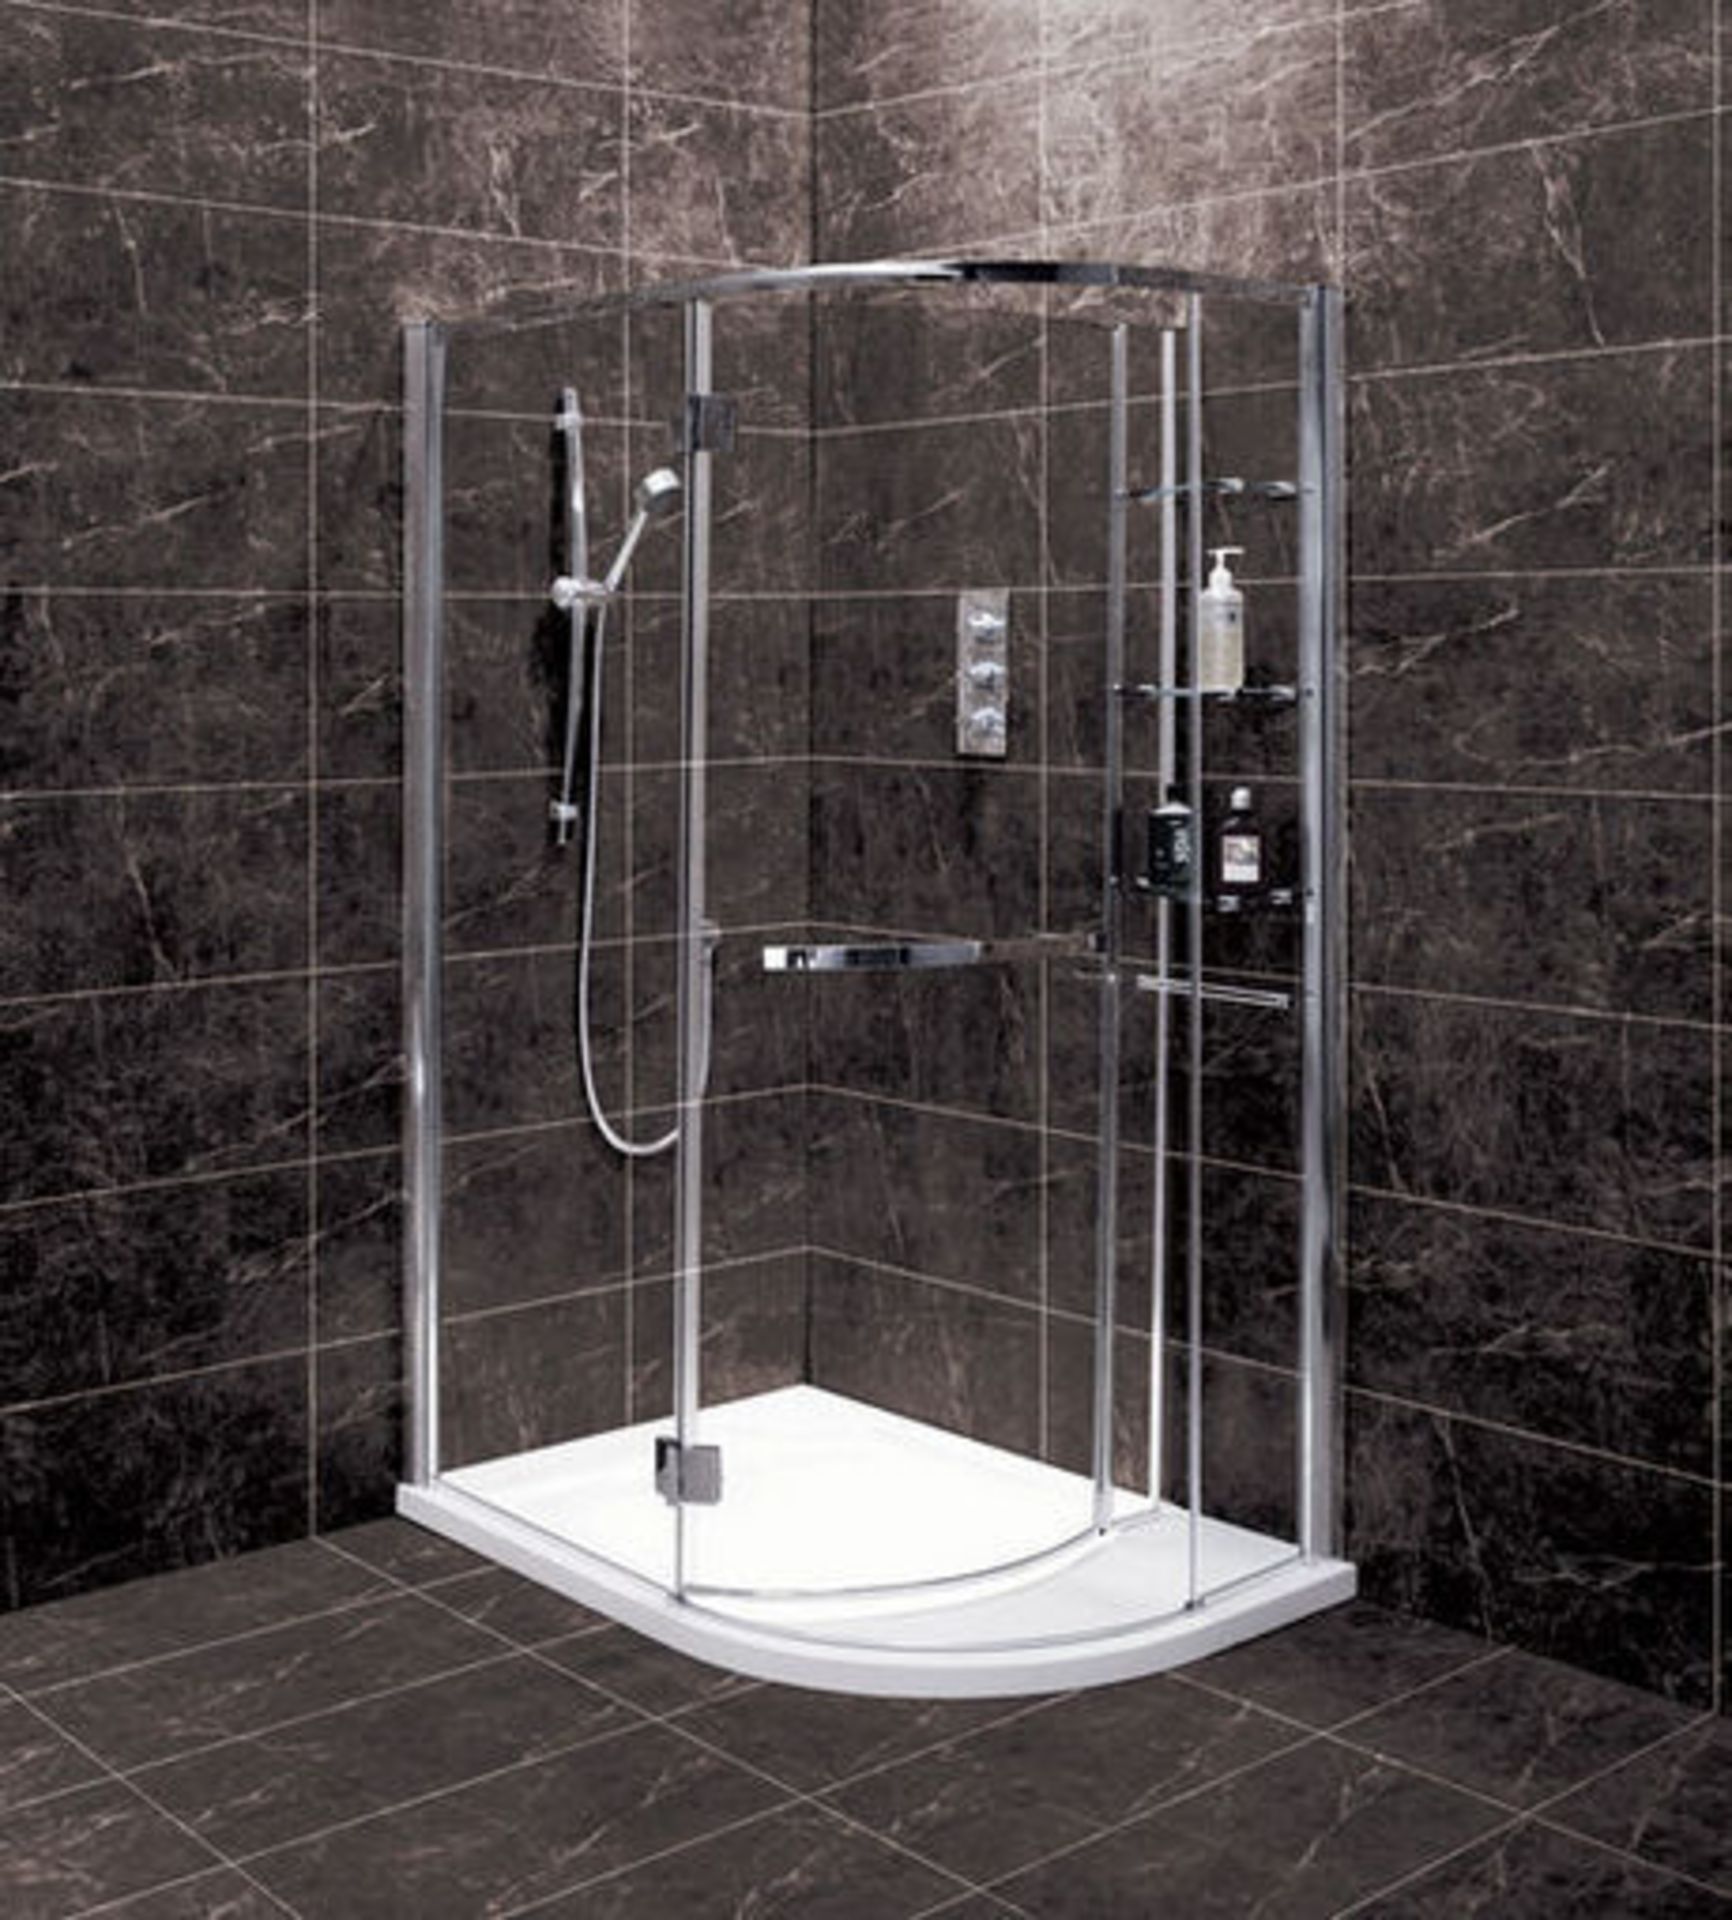 1 x Vogue Tetris Aqua Lotus Left Hand Shower Enclosure With Slimstone Stone Resin Low Profile Shower - Image 2 of 8